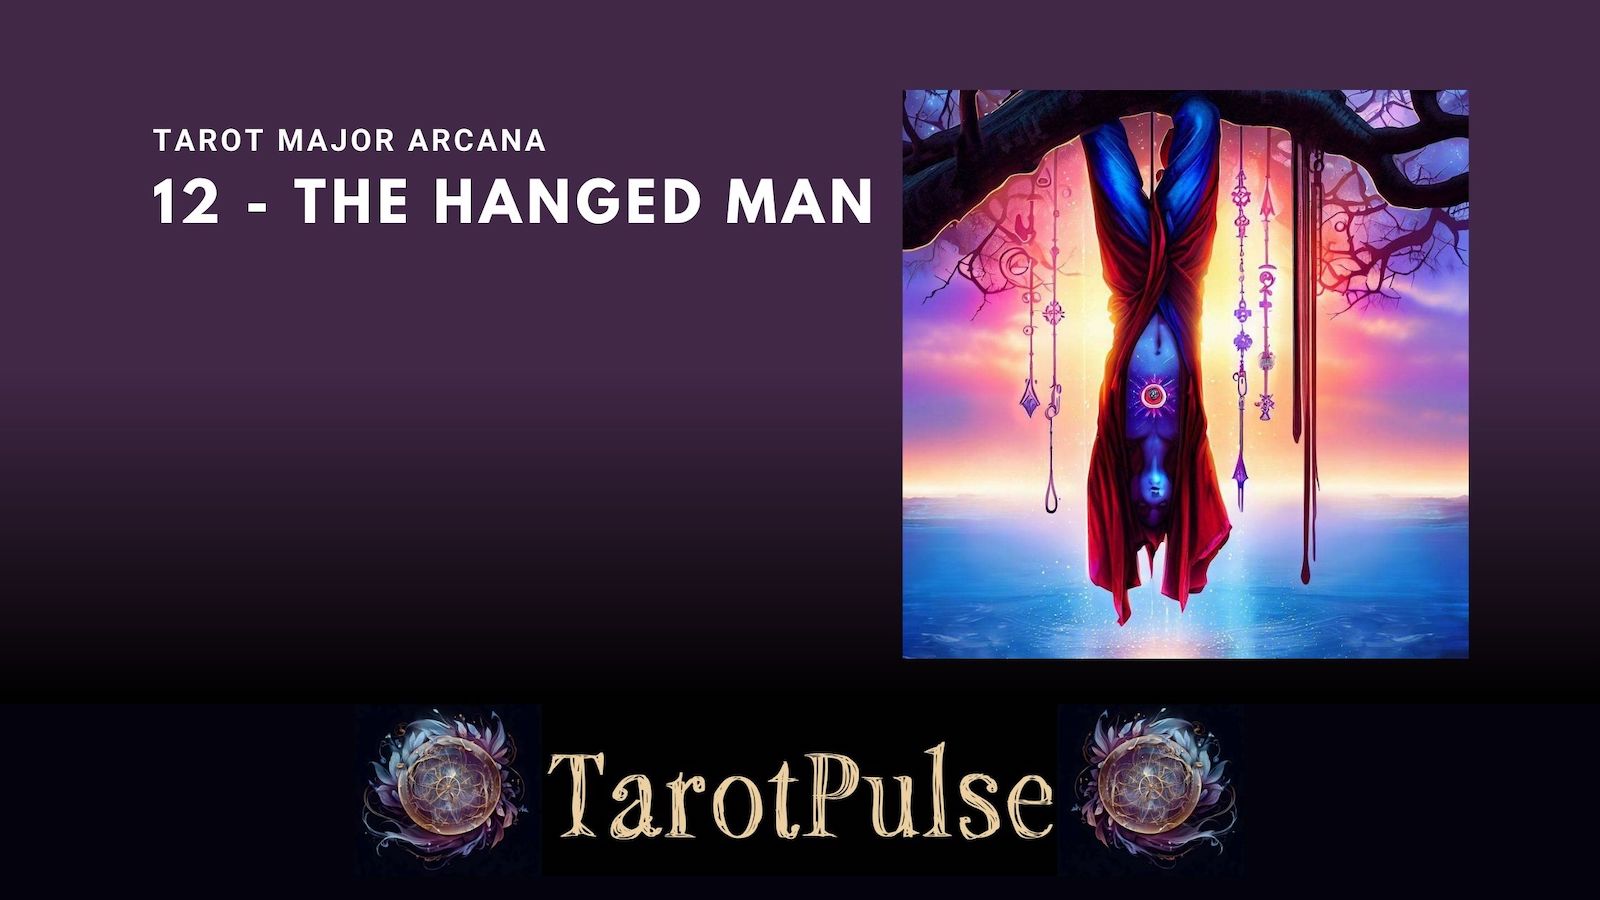 Tarot Major Arcana 12 - The Hanged Man